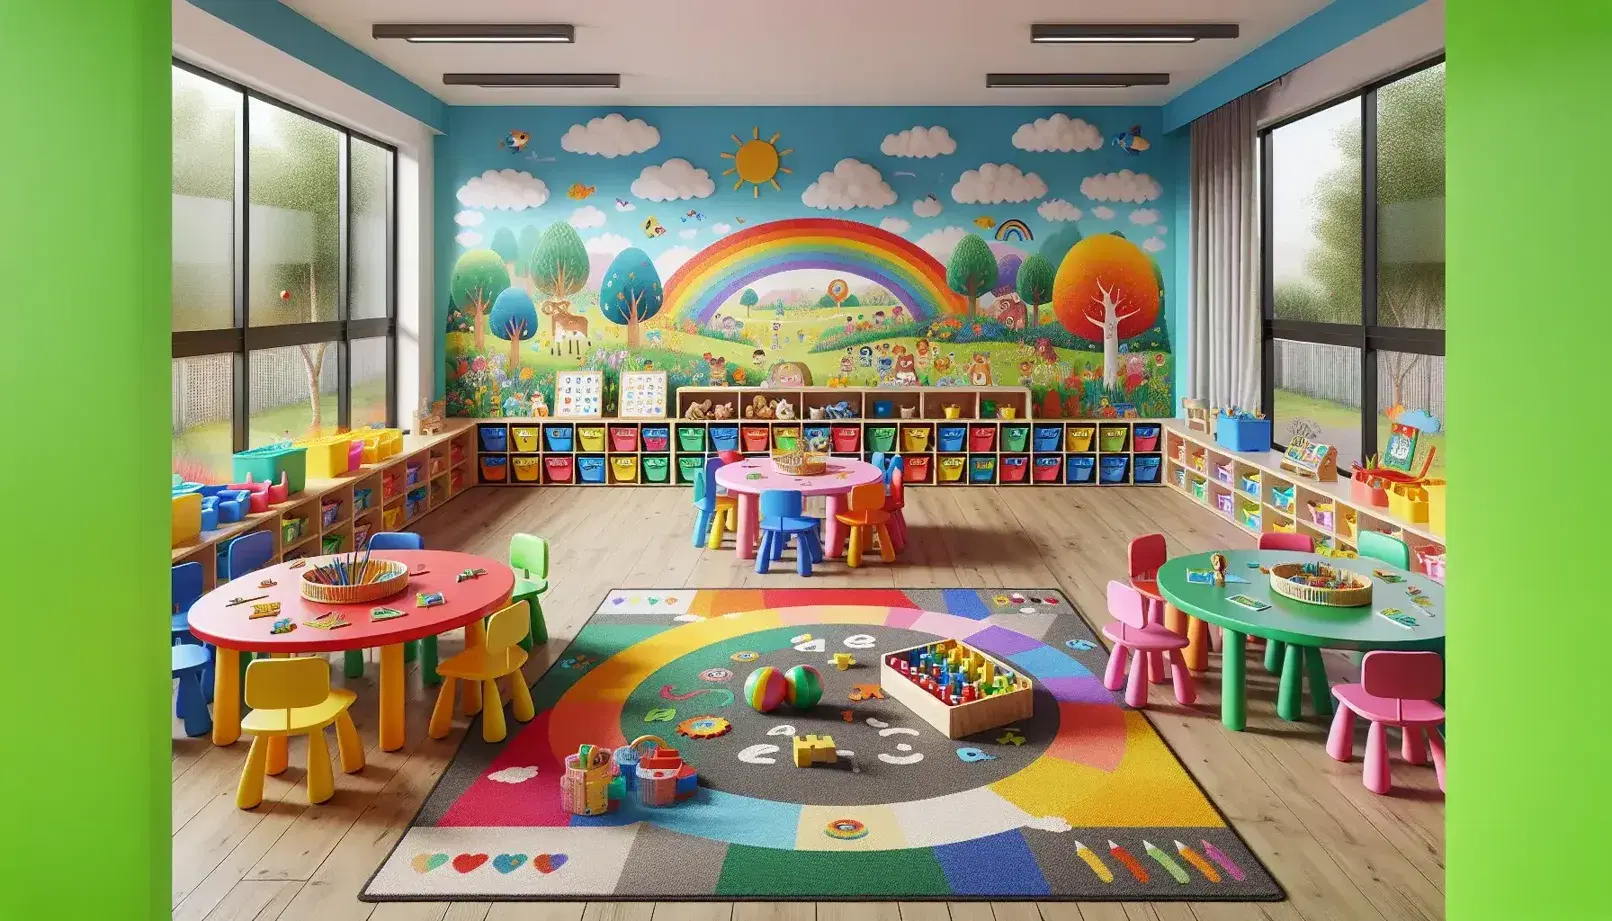 Aula de jardín de infantes colorida con mesas redondas, sillas infantiles, bloques de construcción, rompecabezas y murales de naturaleza, bajo luz natural.